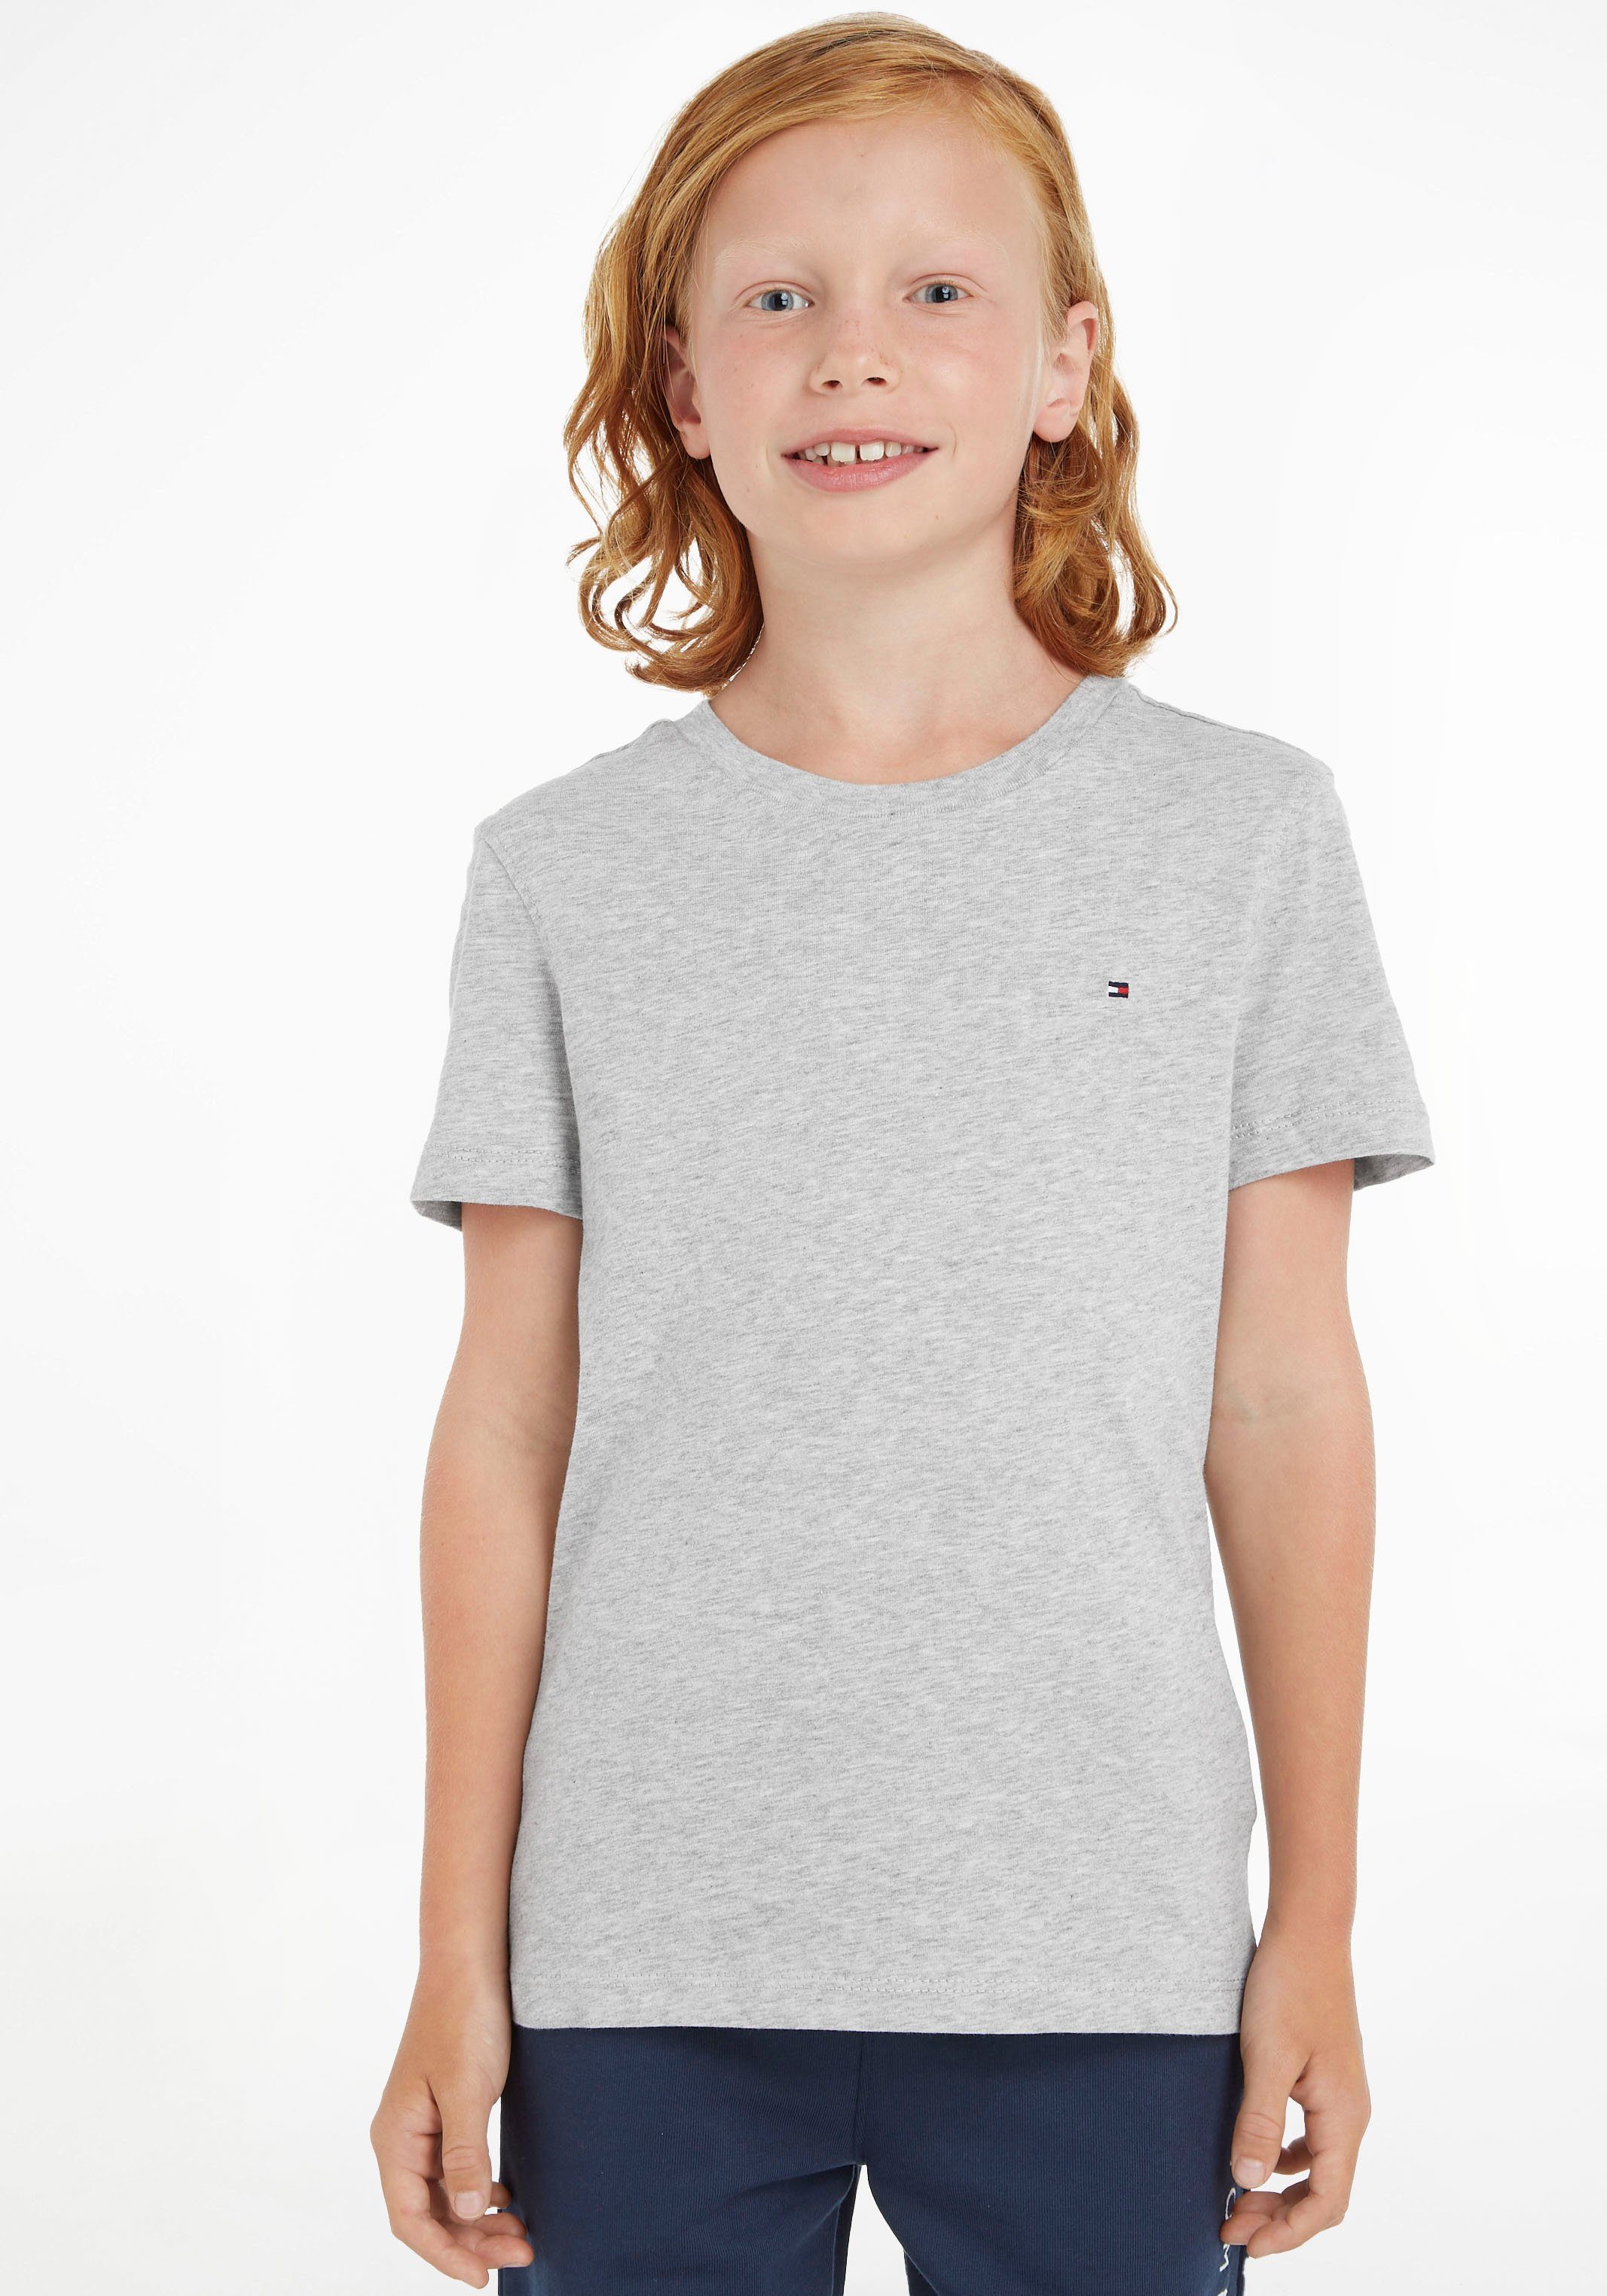 Tommy Hilfiger T-Shirt BASIC KNIT CN Kinder Kids MiniMe Junior BOYS